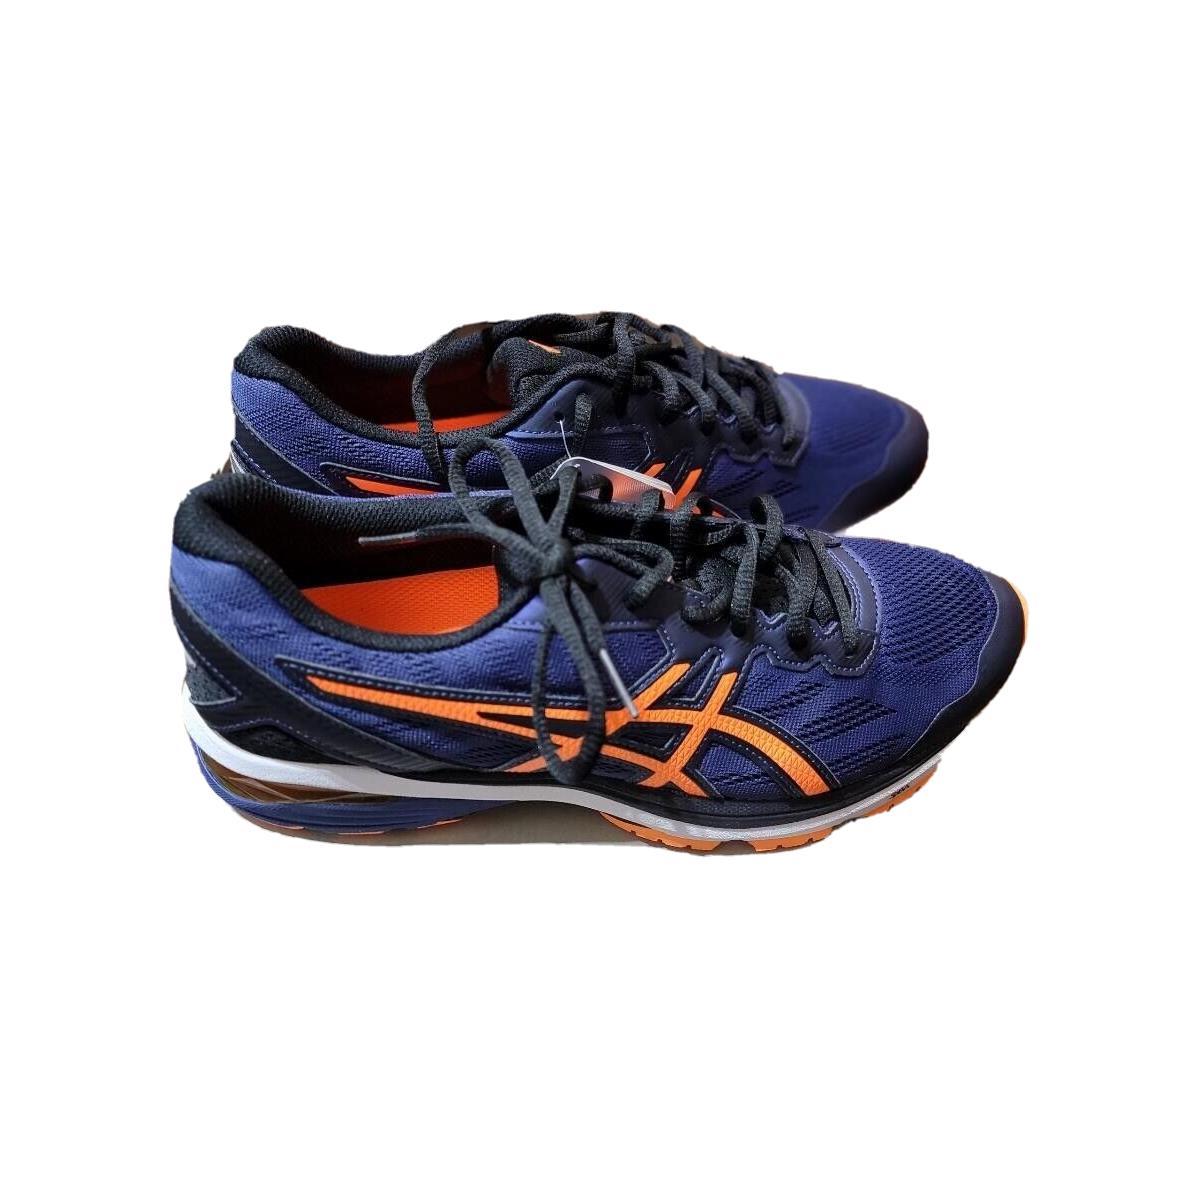 Asics gt-1000 5 t6a3n Indigo Blue/hot Orange/black Size 9.5 Running Shoes